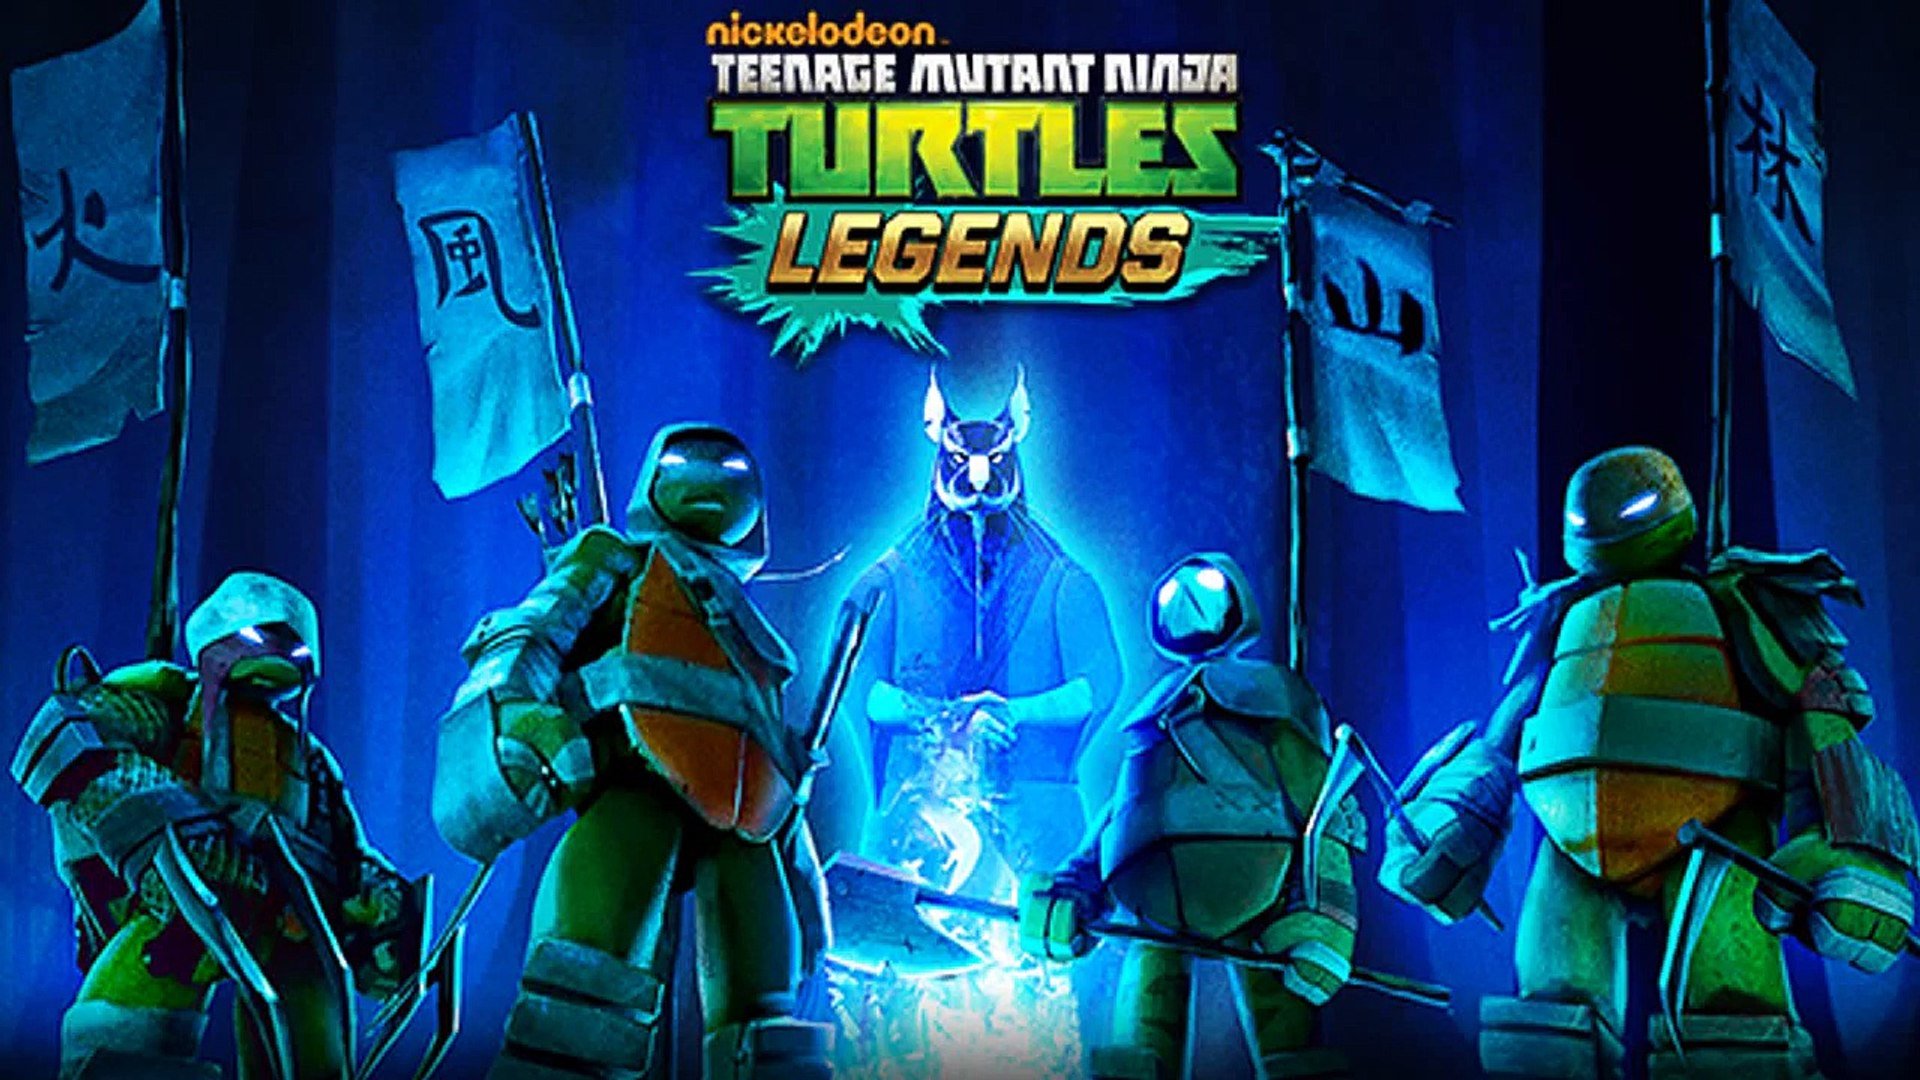 Черепашки ниндзя легенды со всеми. Teenage Mutant Ninja Turtles Legends. Teenage Mutant Ninja Turtles Legends 2016. Черепашки ниндзя Туртлес легенд. Черепашки ниндзя видение.